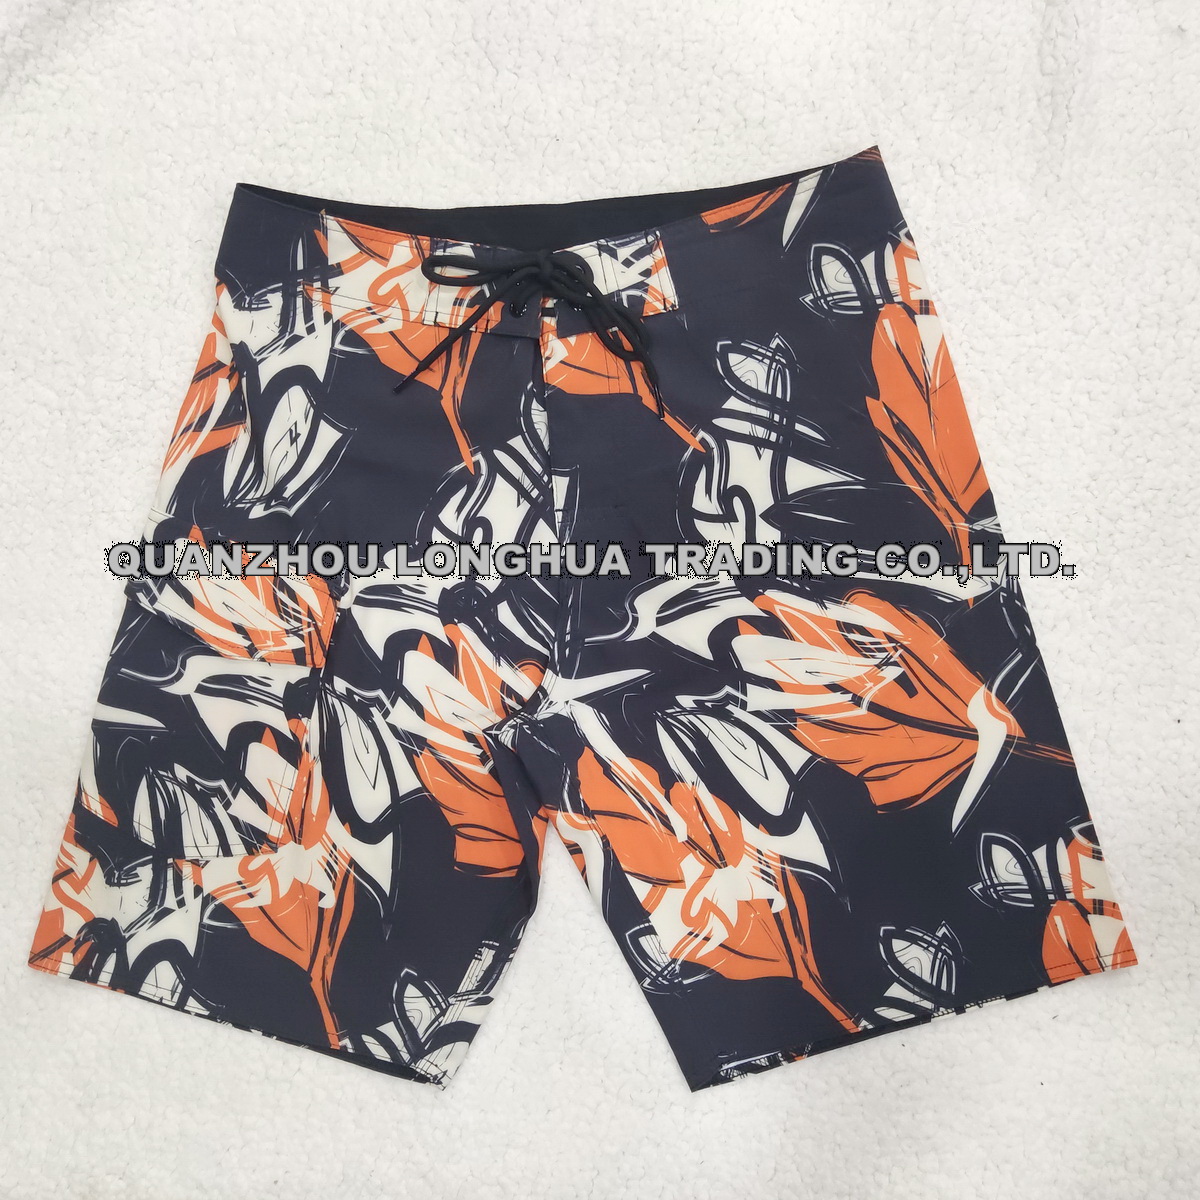 Mens Boys Beach Shorts Swim Shorts with Printing Apparel